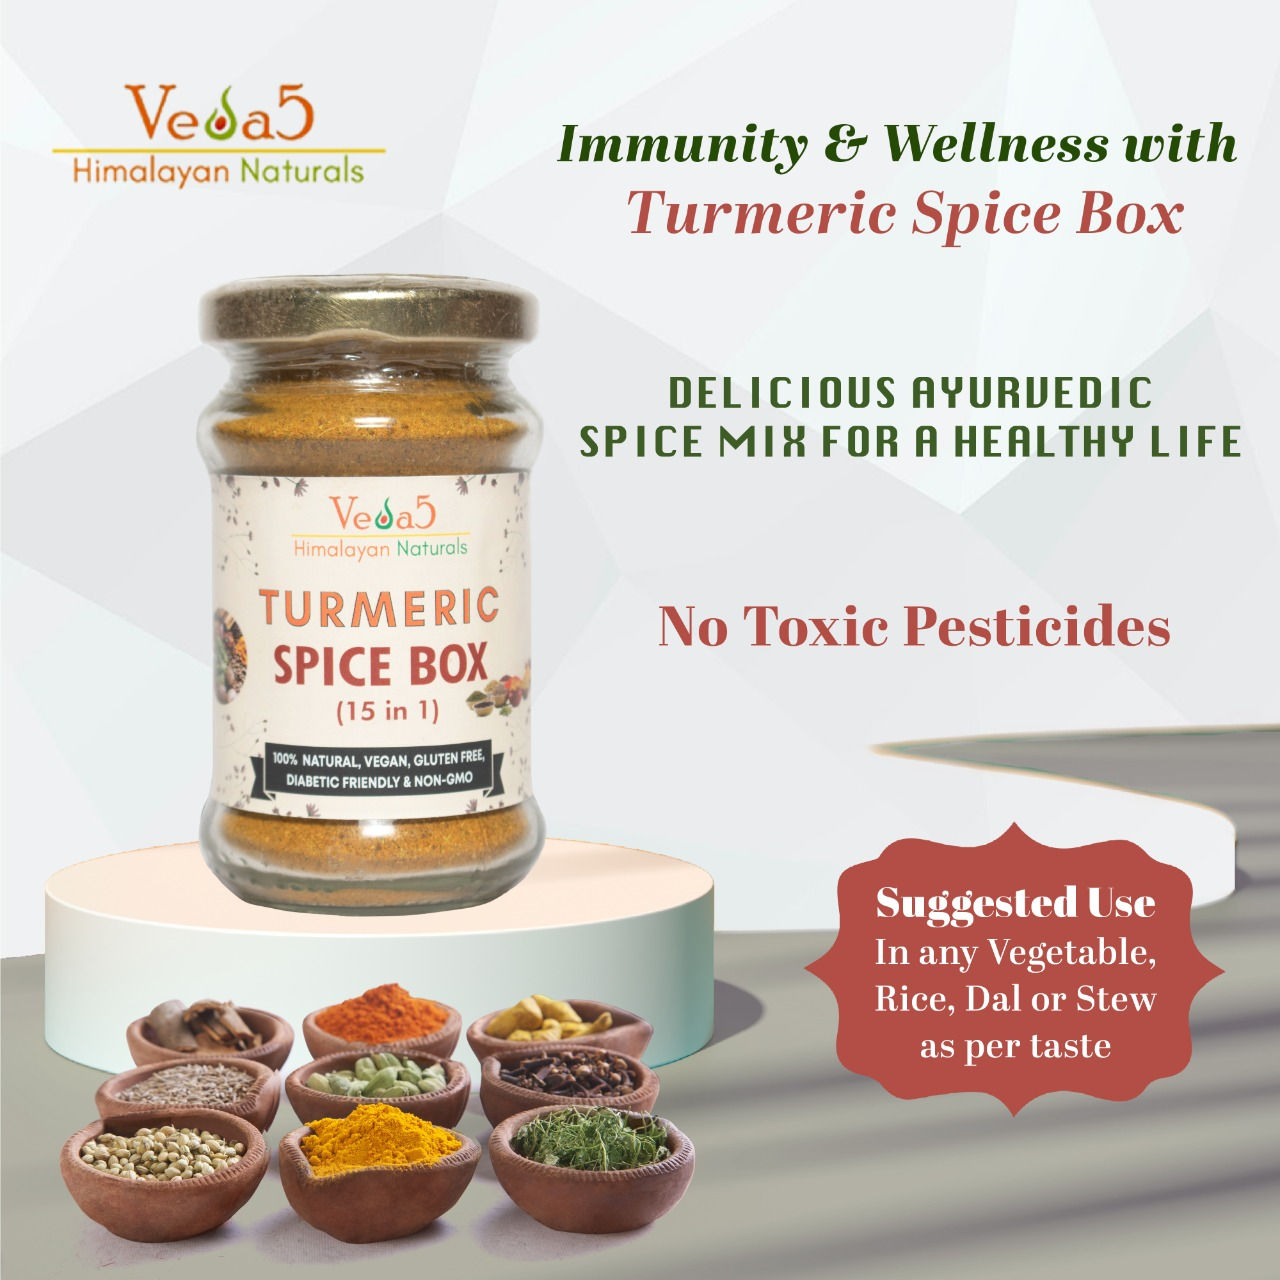 Turmeric Spice Box 15 in 1 Veda5 Himalayan Naturals